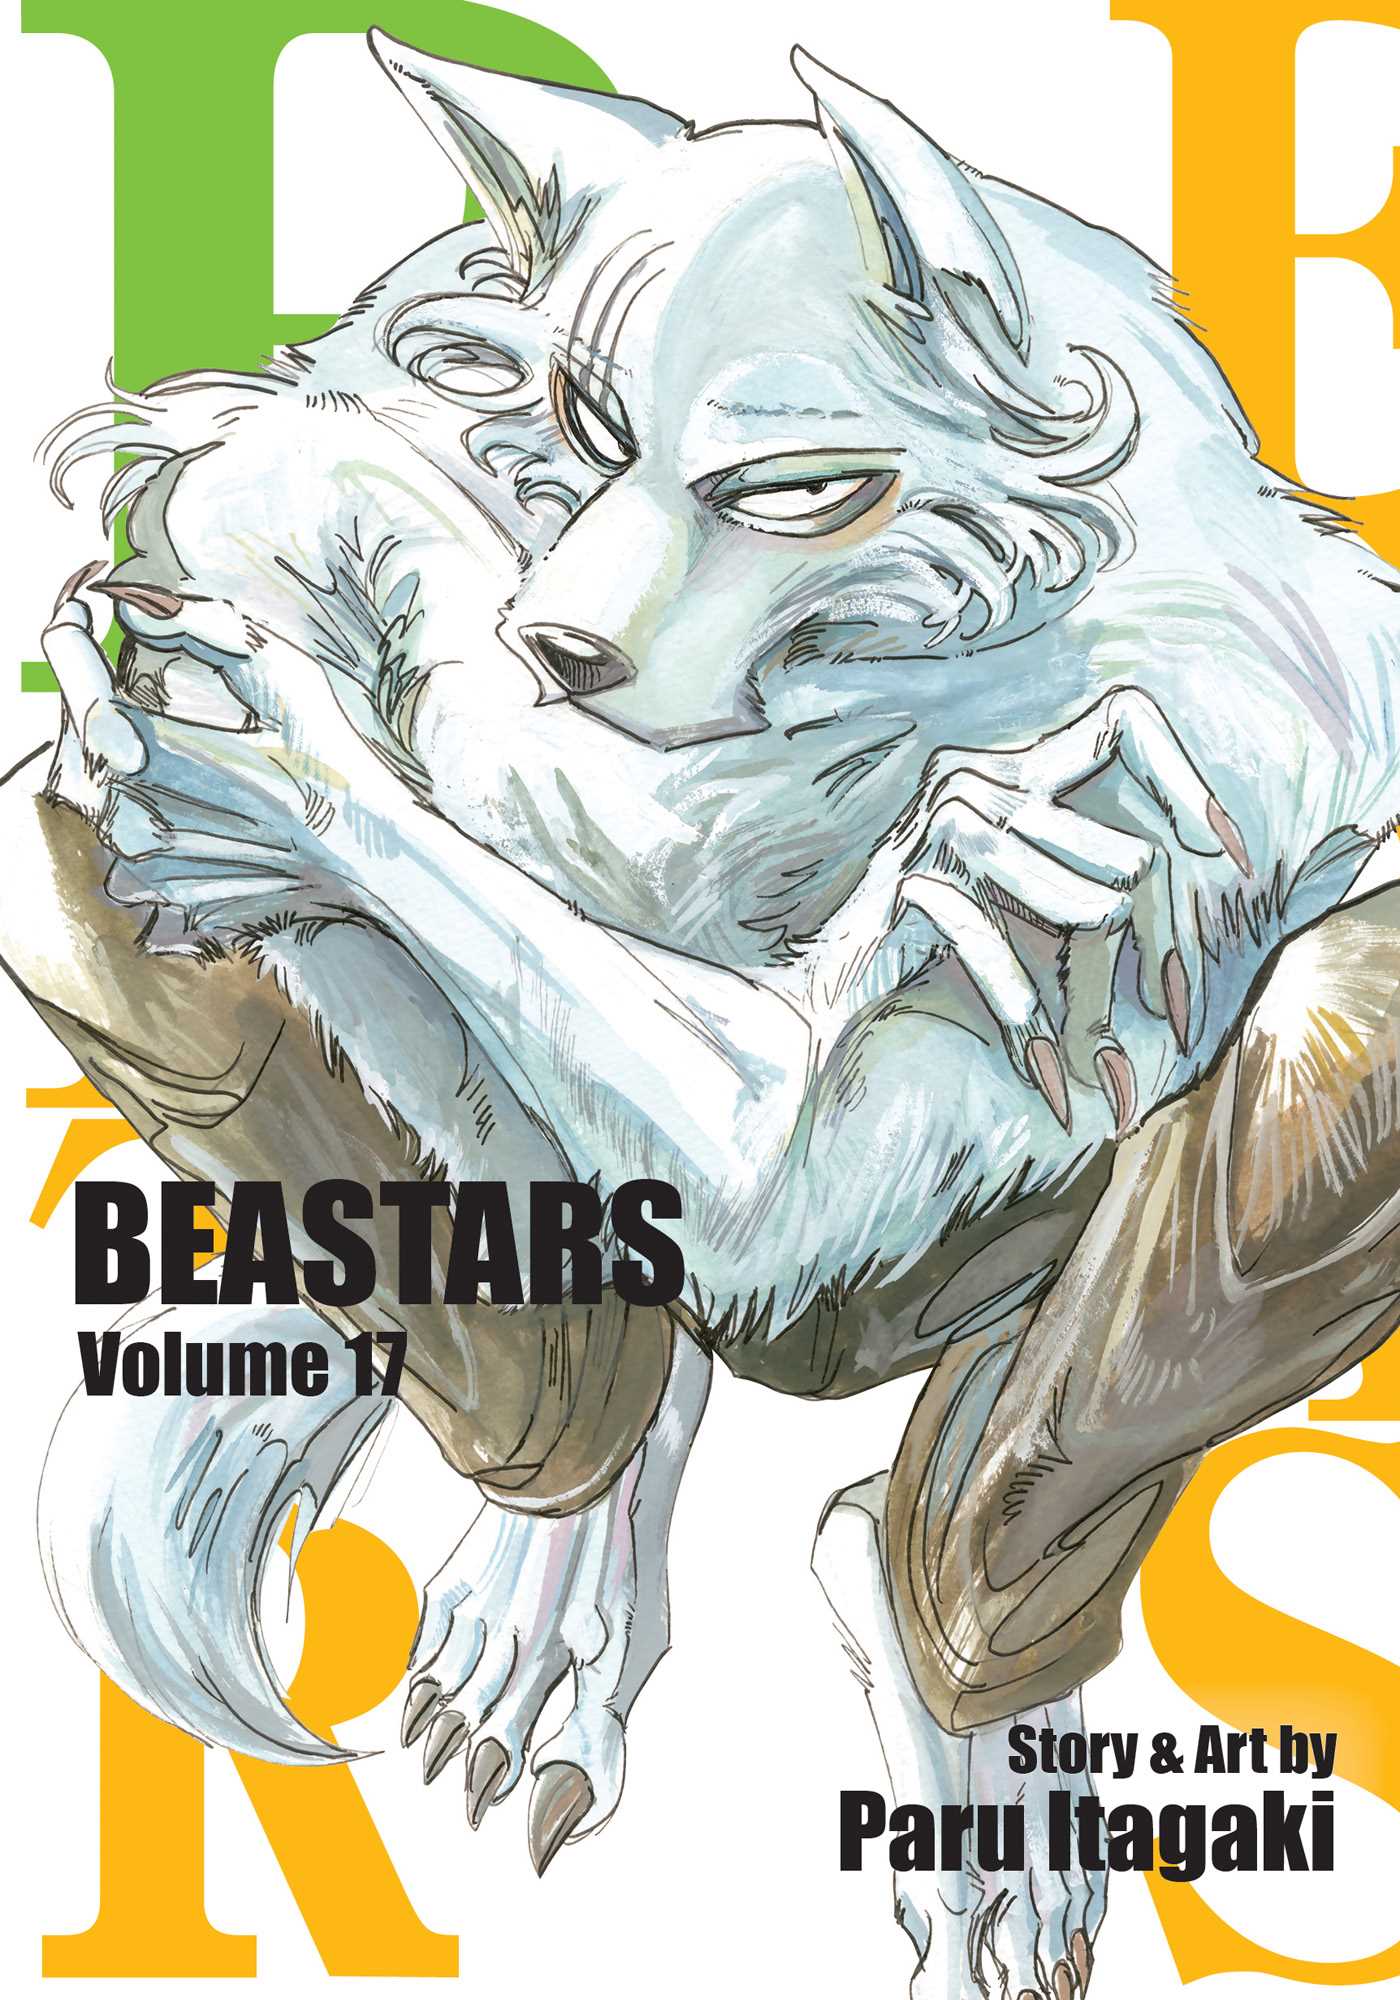 Beastars - Volume 17